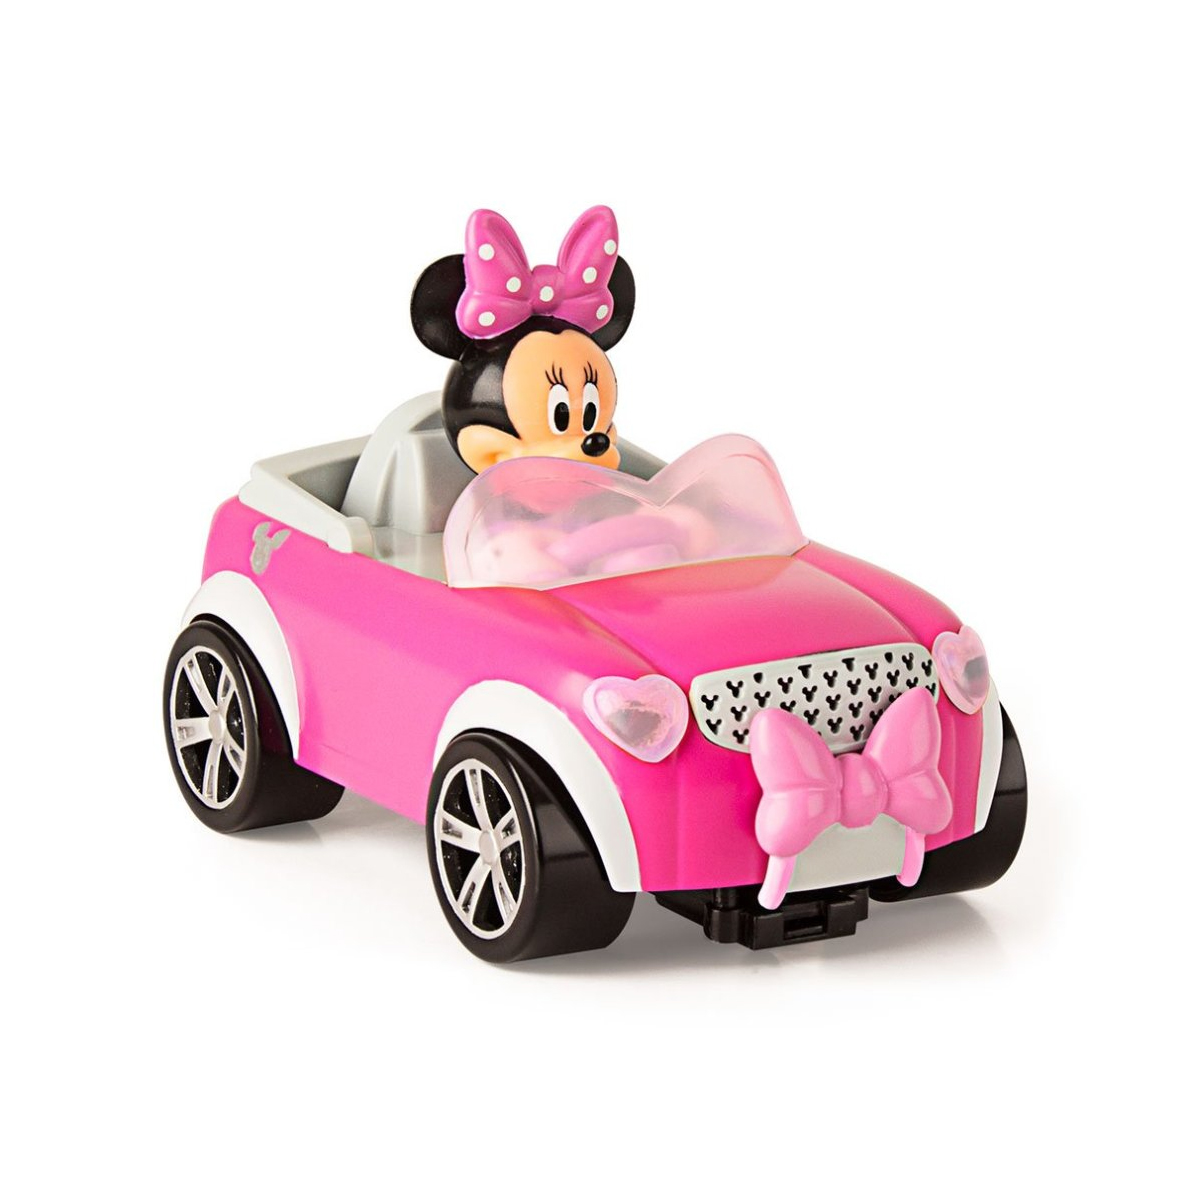 IMC Toys Disney Junior Minnie Mouse City fun Rc Car Ferngesteuert sehr RAR 